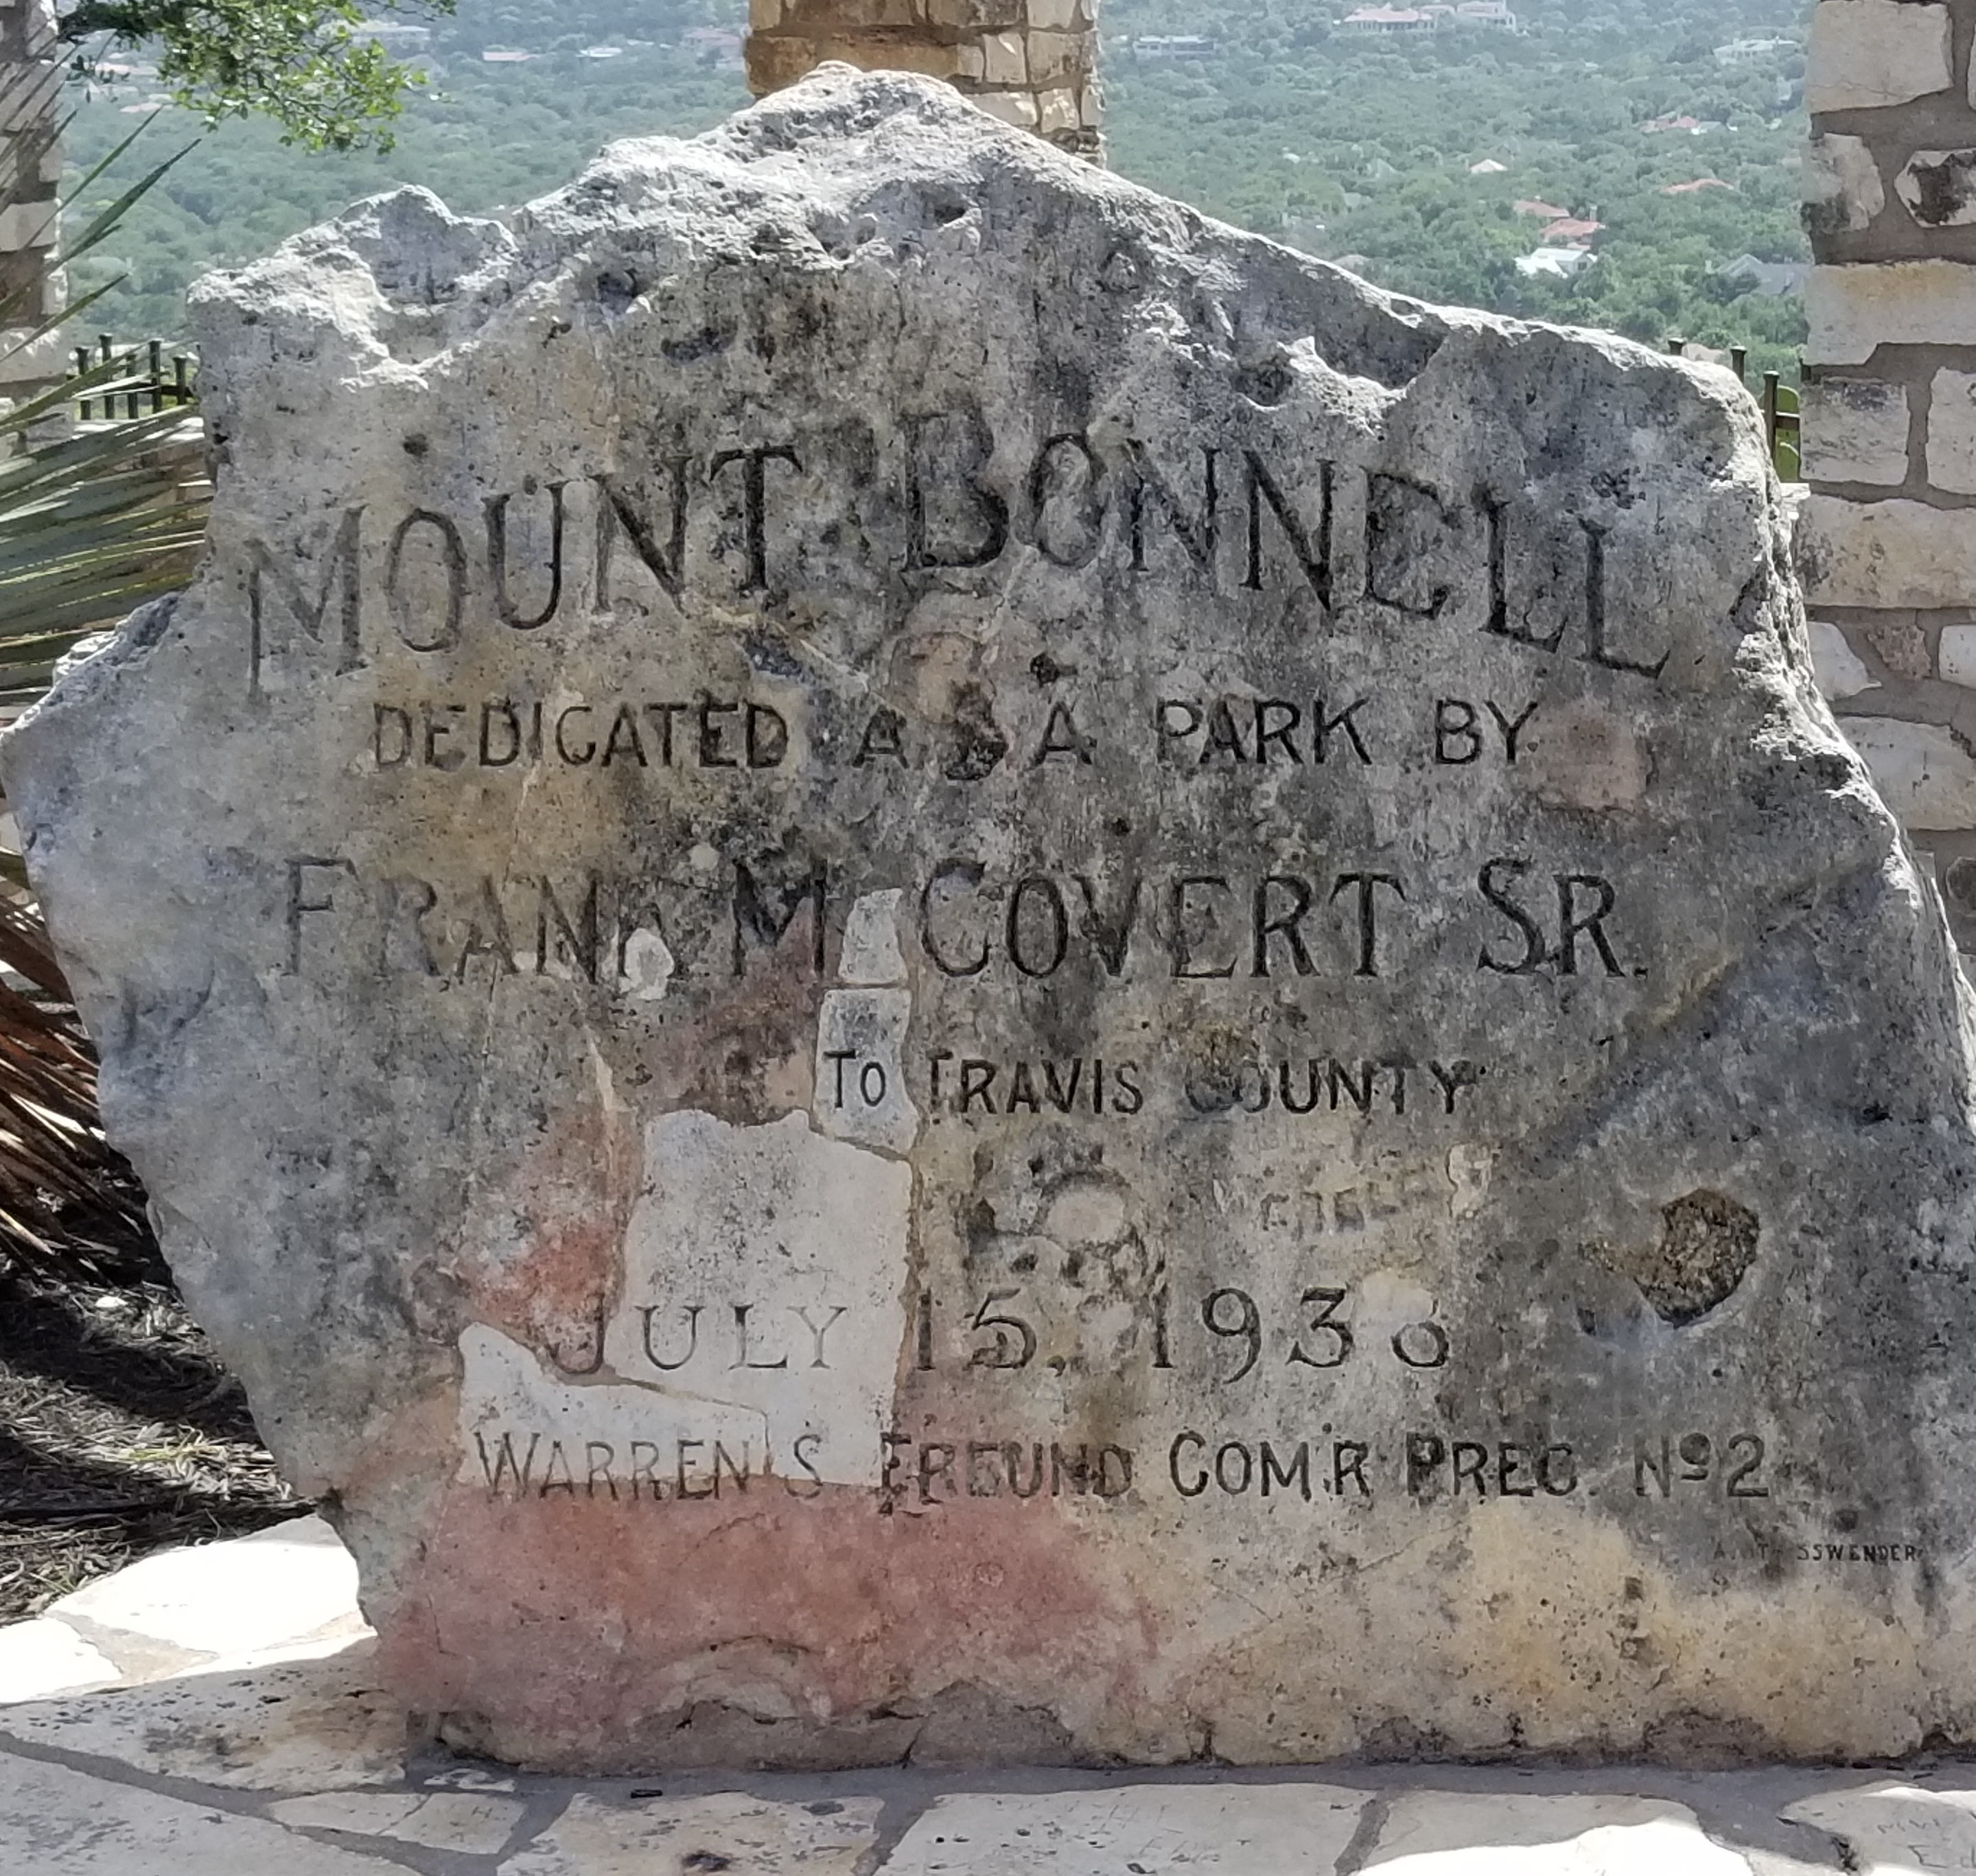 Mount-Bonnell-rock-sign